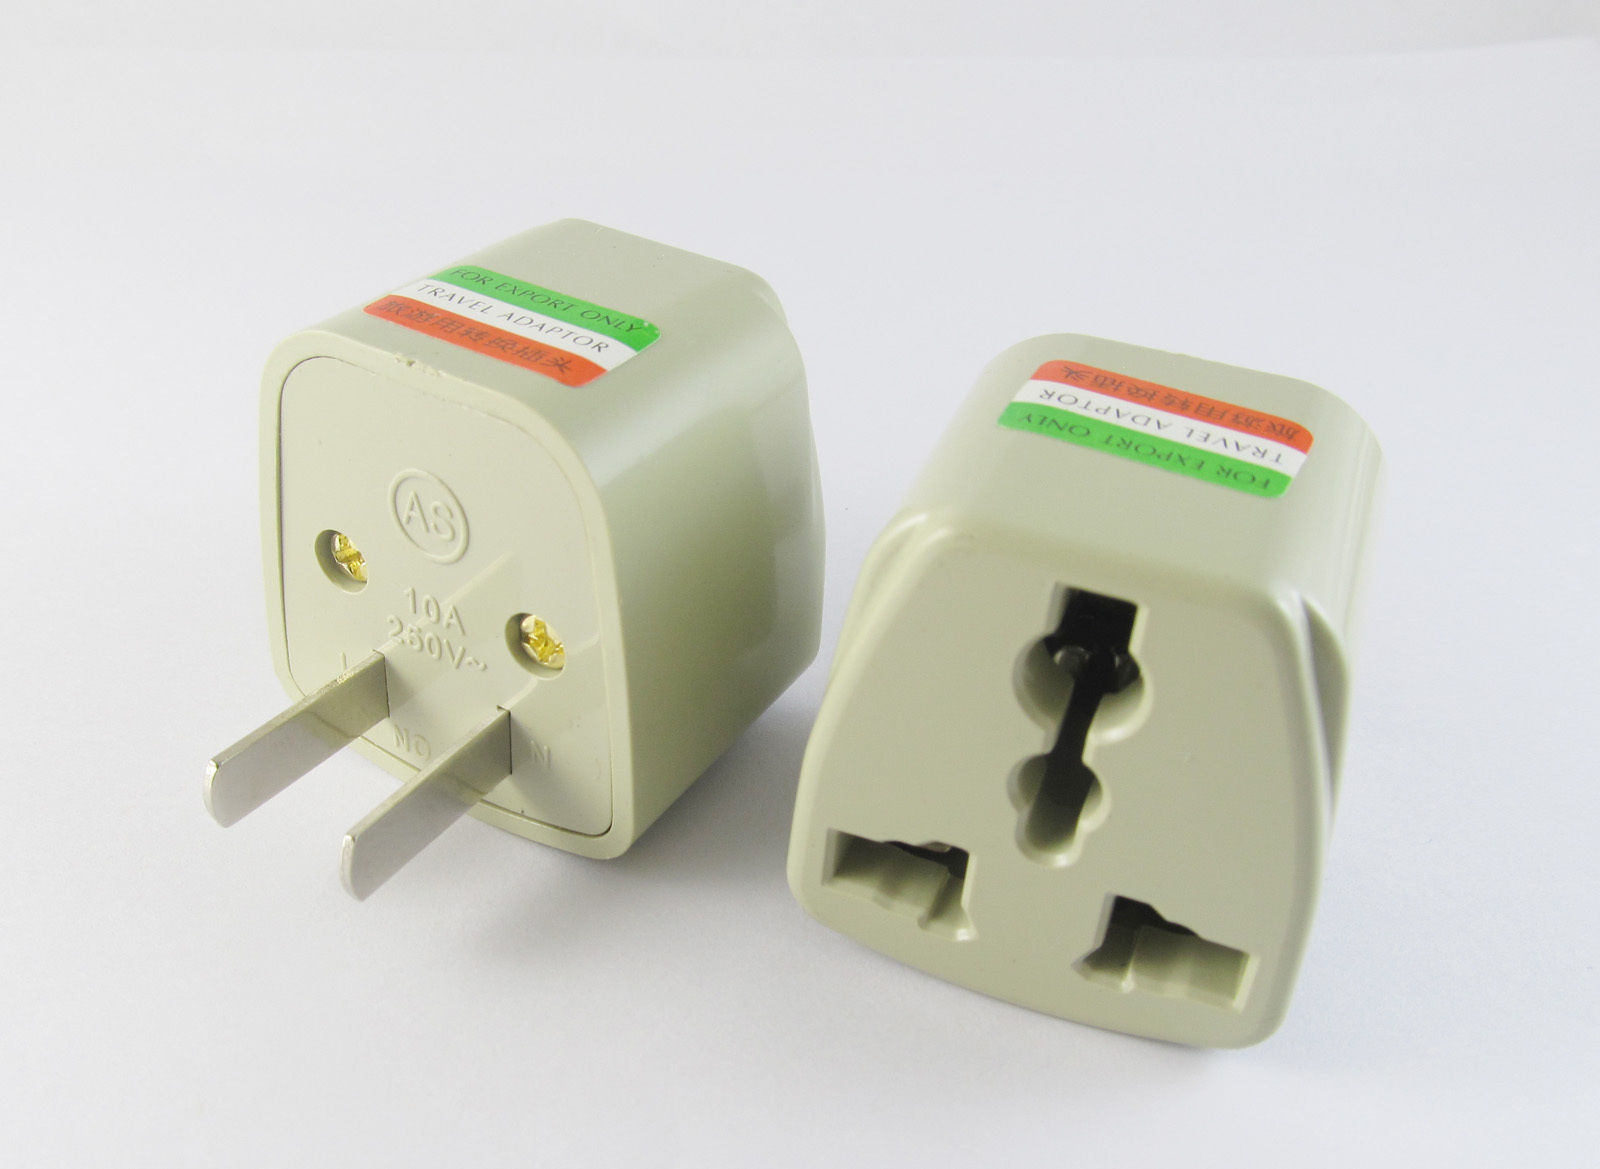 Universal US UK EURO AU TO US Travel Wall AC Power Plug Adapter Converter 10A